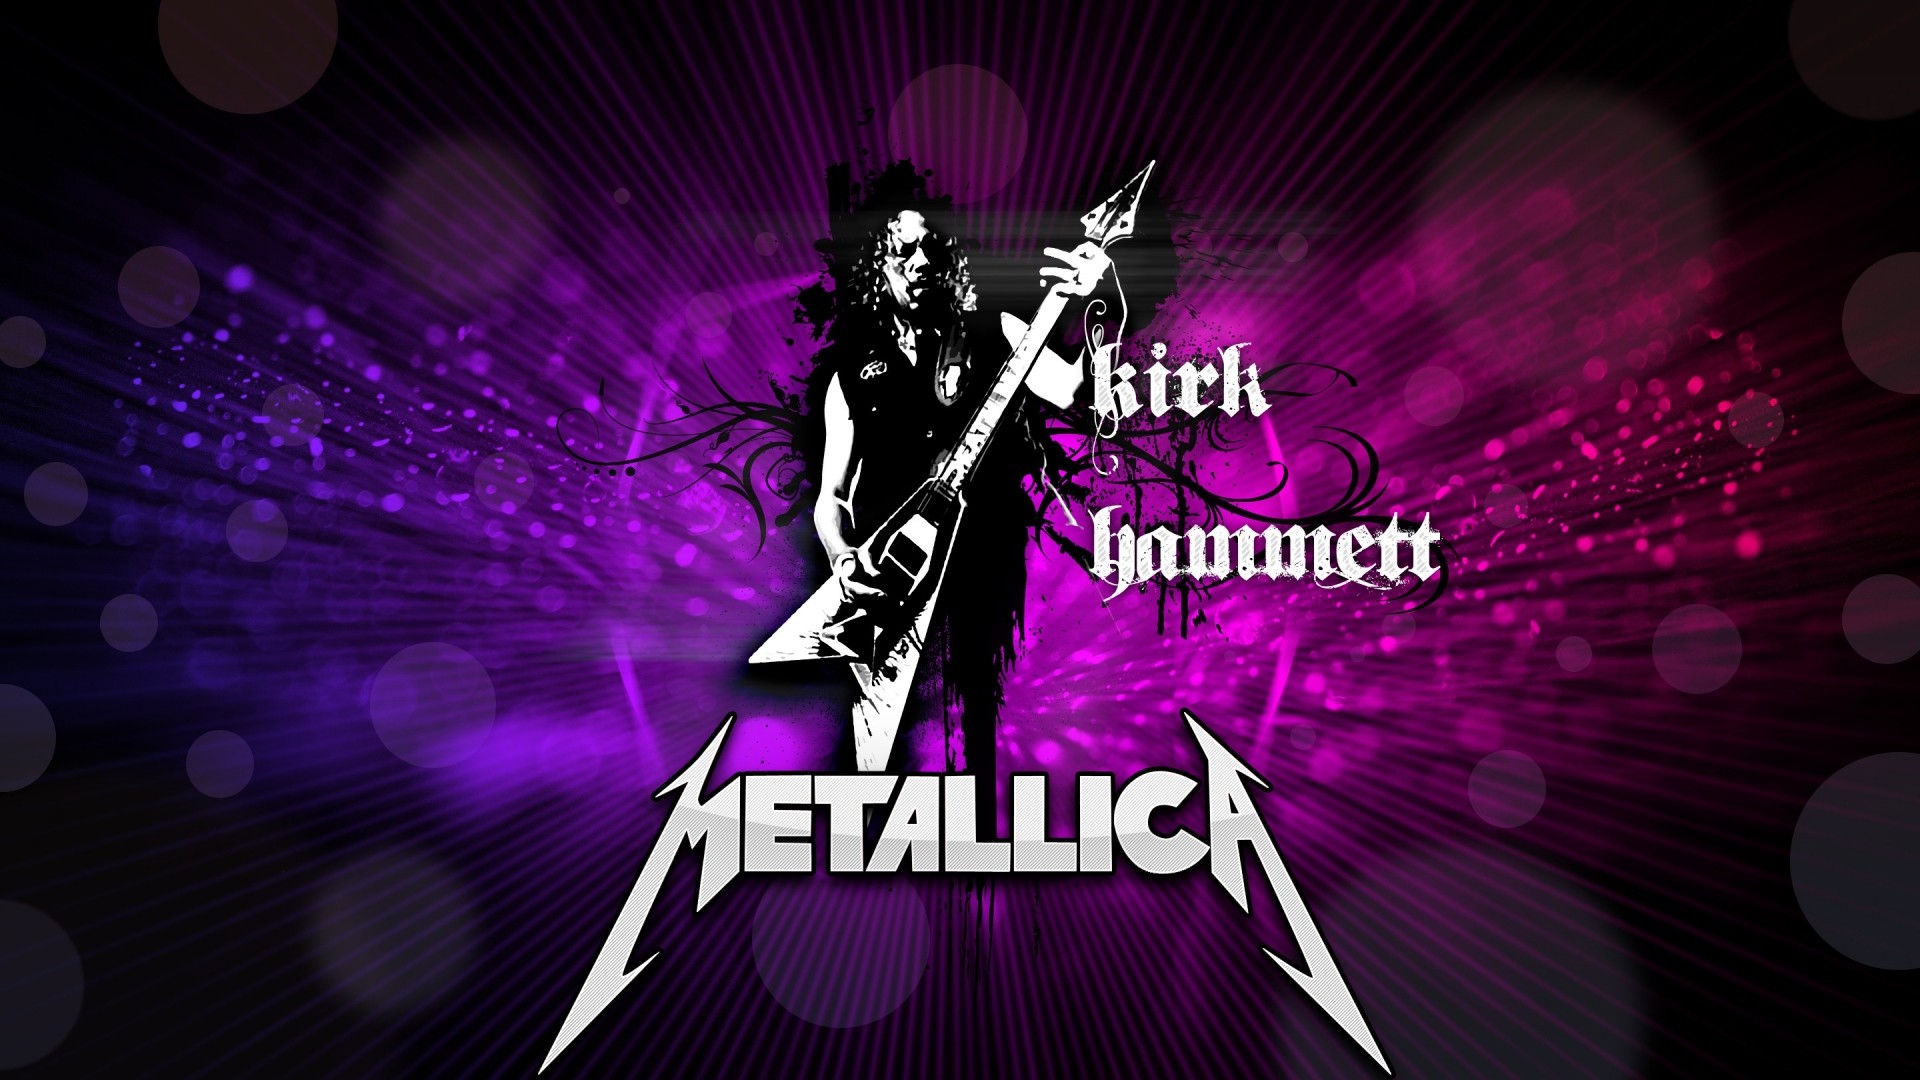 1920x1080 Metallica HD Background http://wallpapers-and-backgrounds.net/metallica